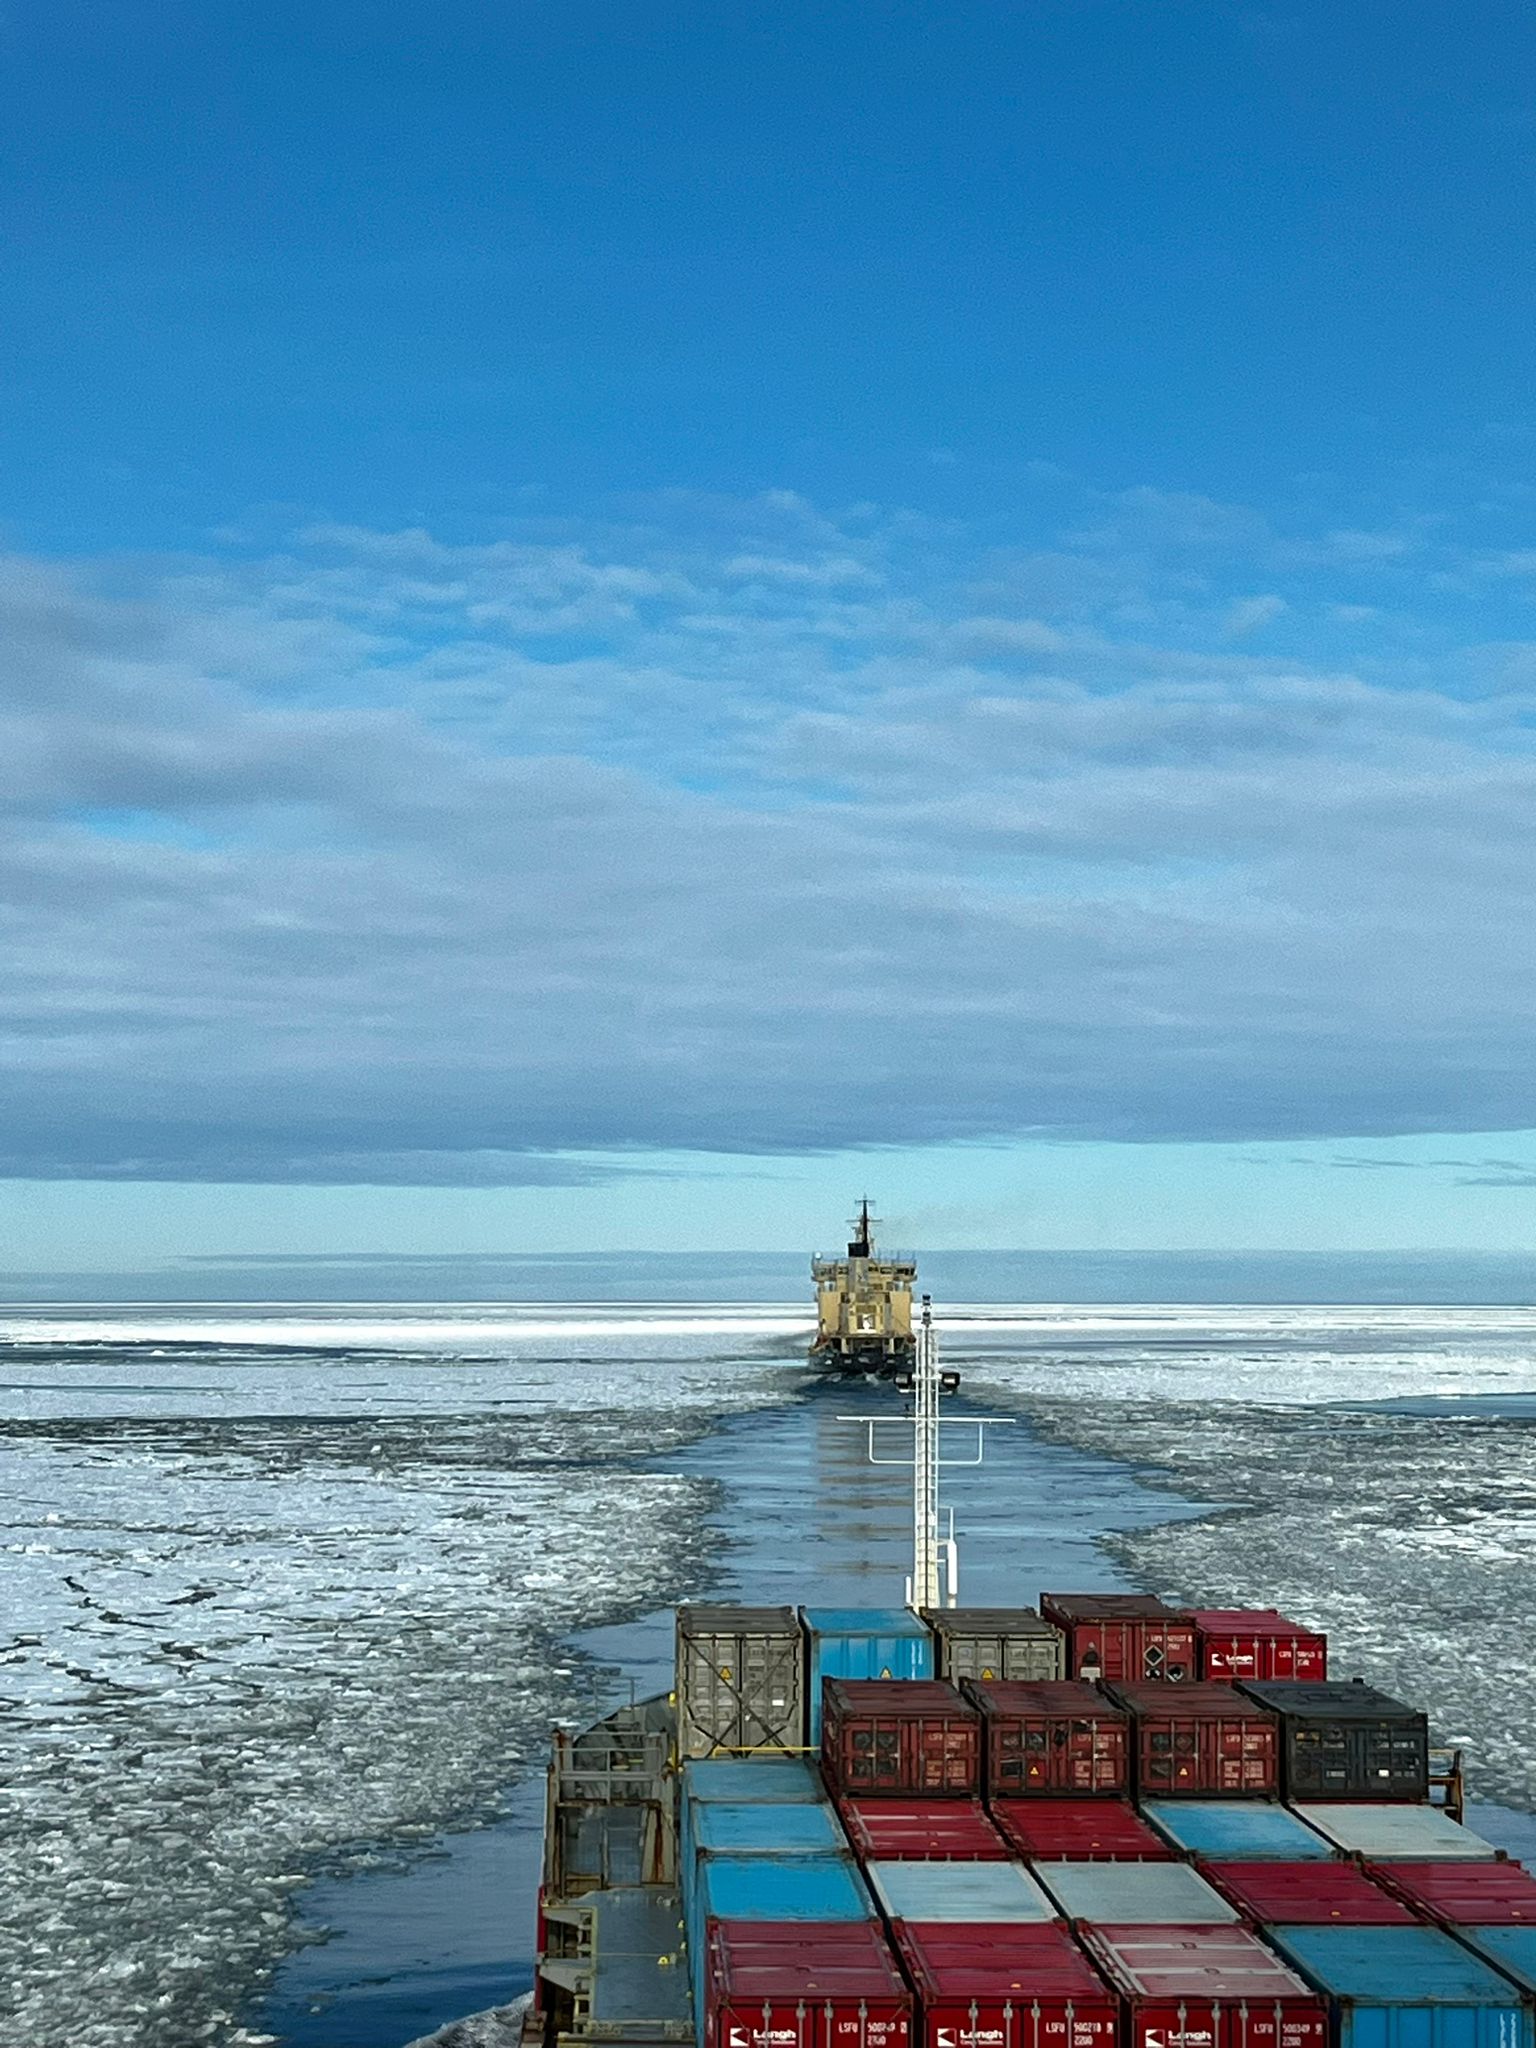 cargo ship traveling through melting ice sea in Gulf of Bothnia